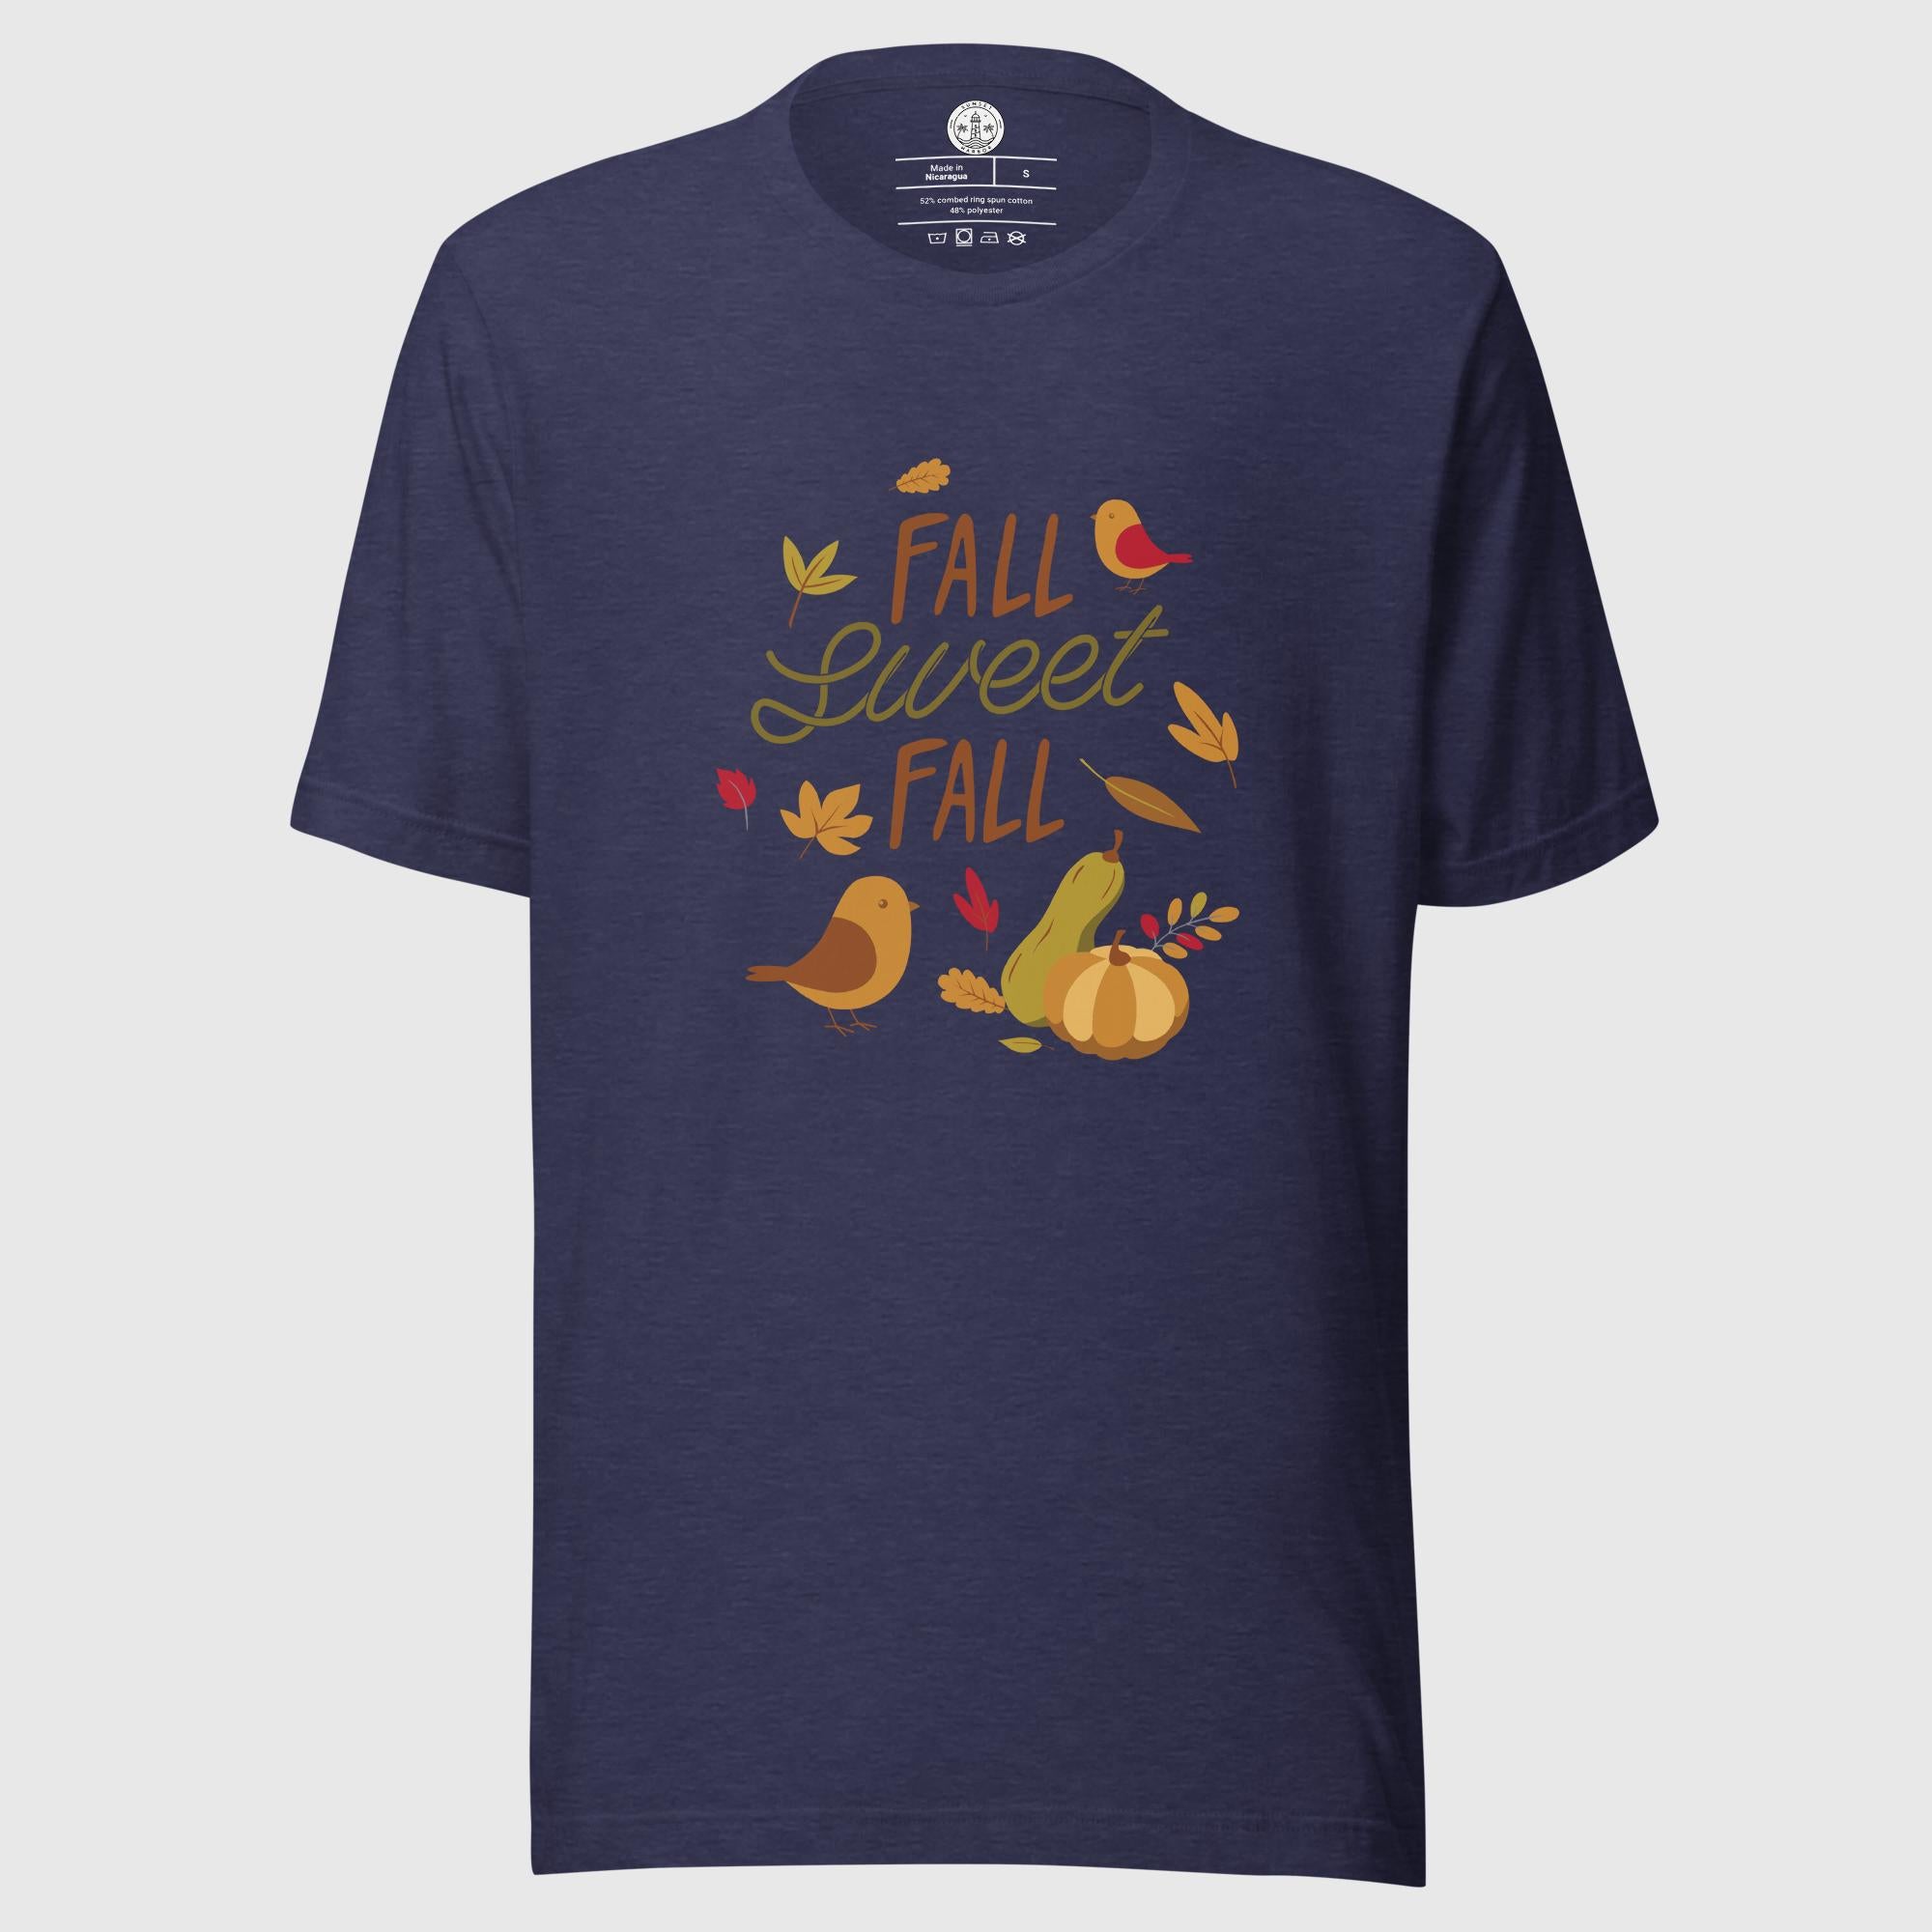 Damen T-Shirt - Fall Sweet Fall